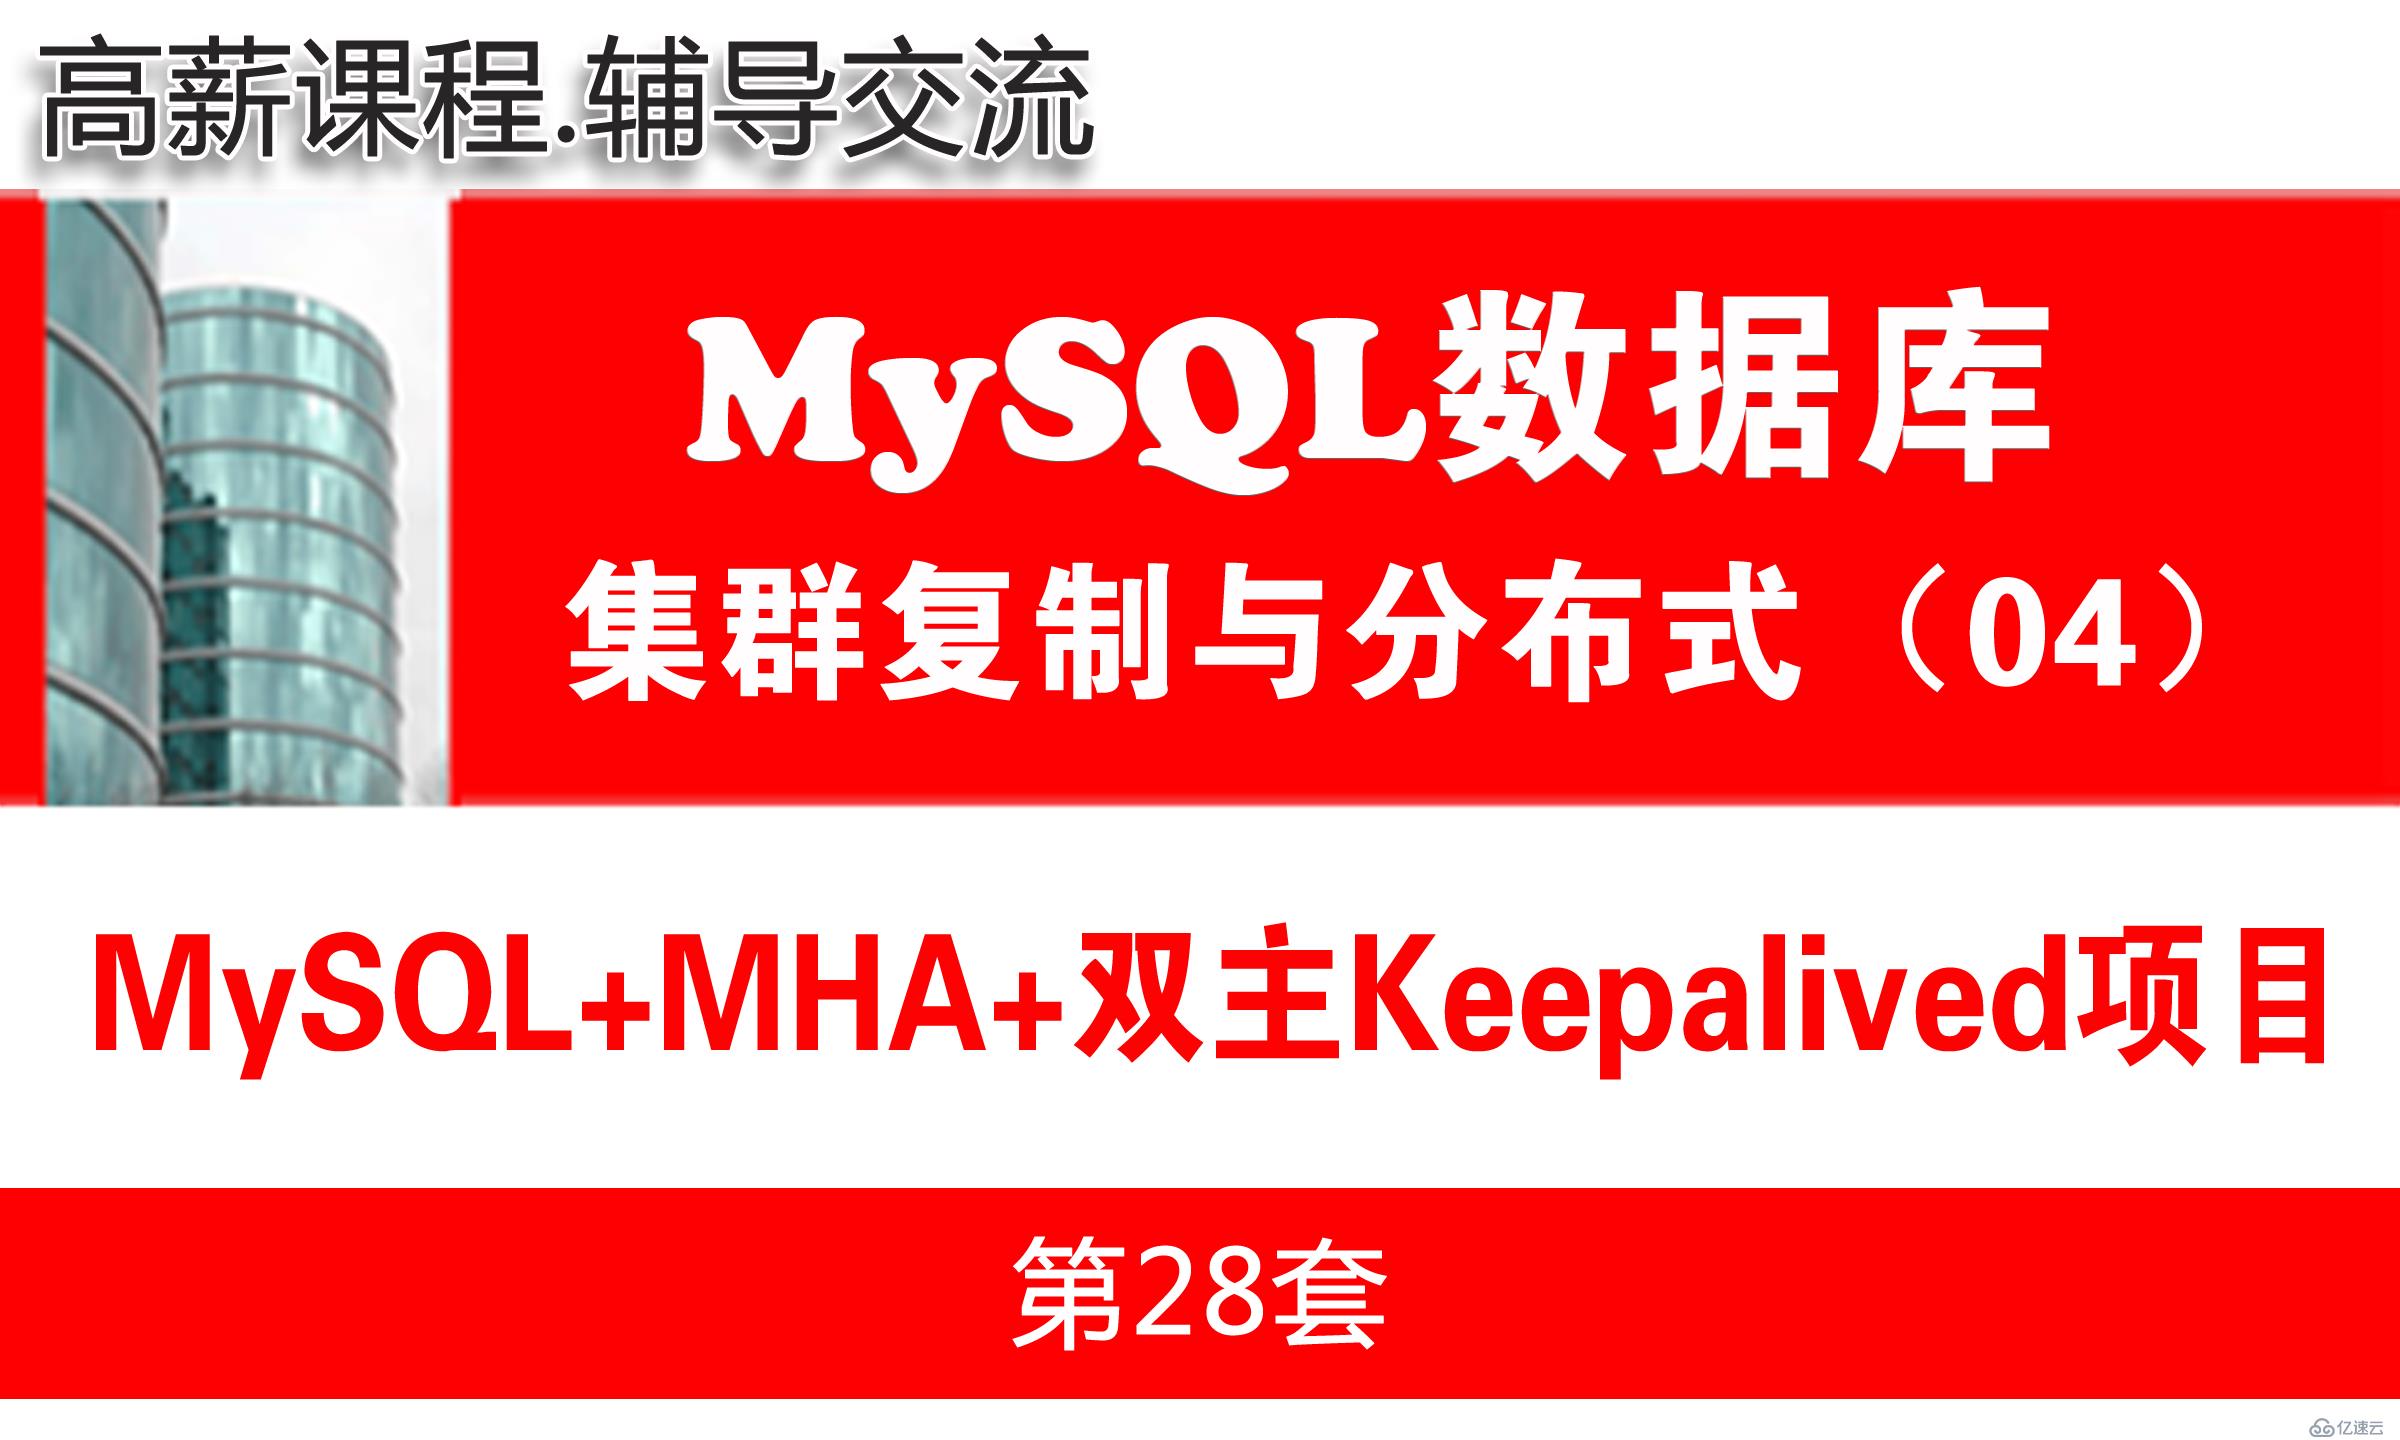 MySQL主从复制项目(MHA+双主Keepalived)_MySQL高可用复制与分布式集群架构04